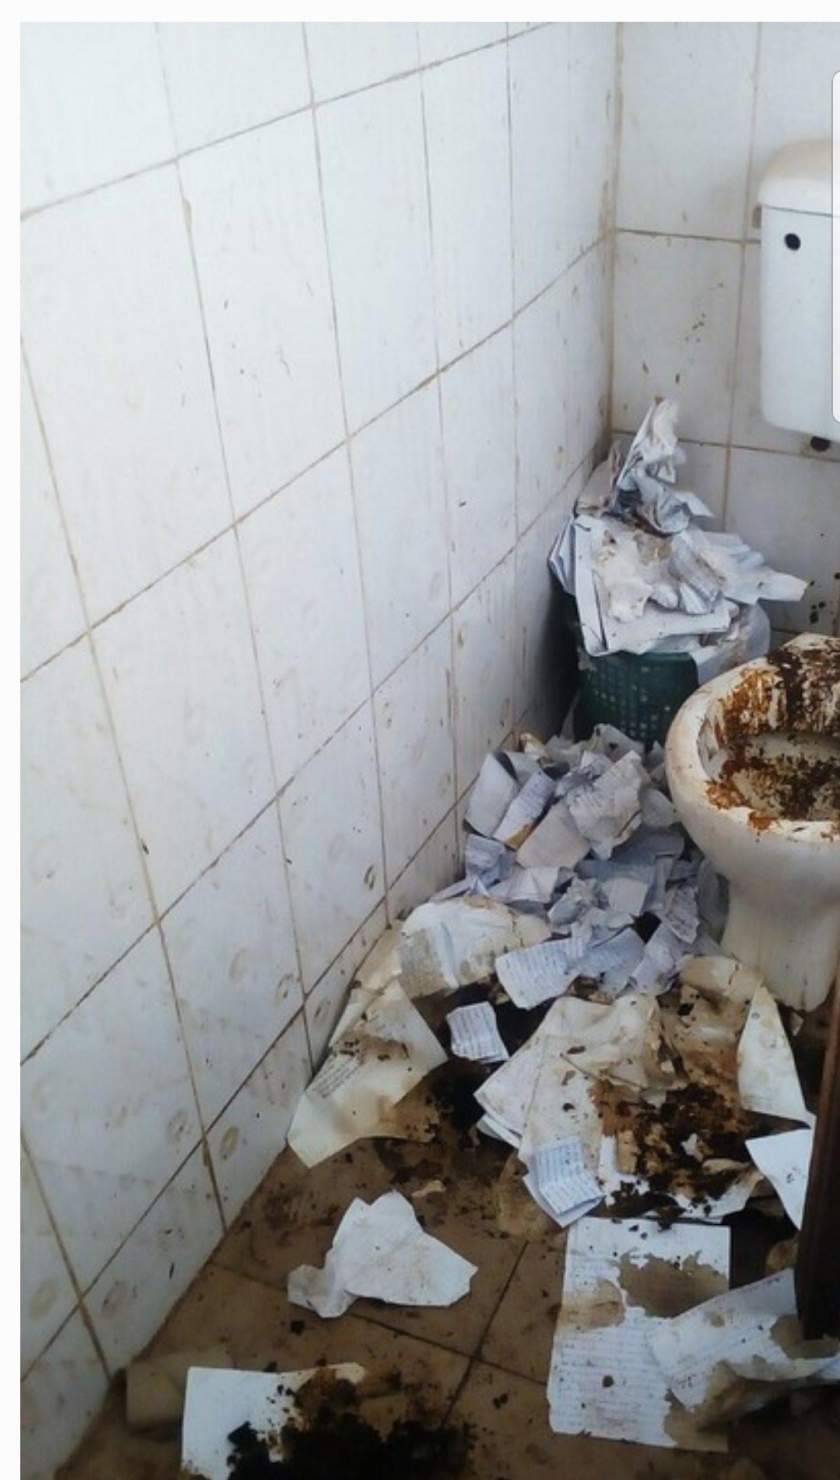 Photos of alleged UNN hostel leaves Twitter user in shock